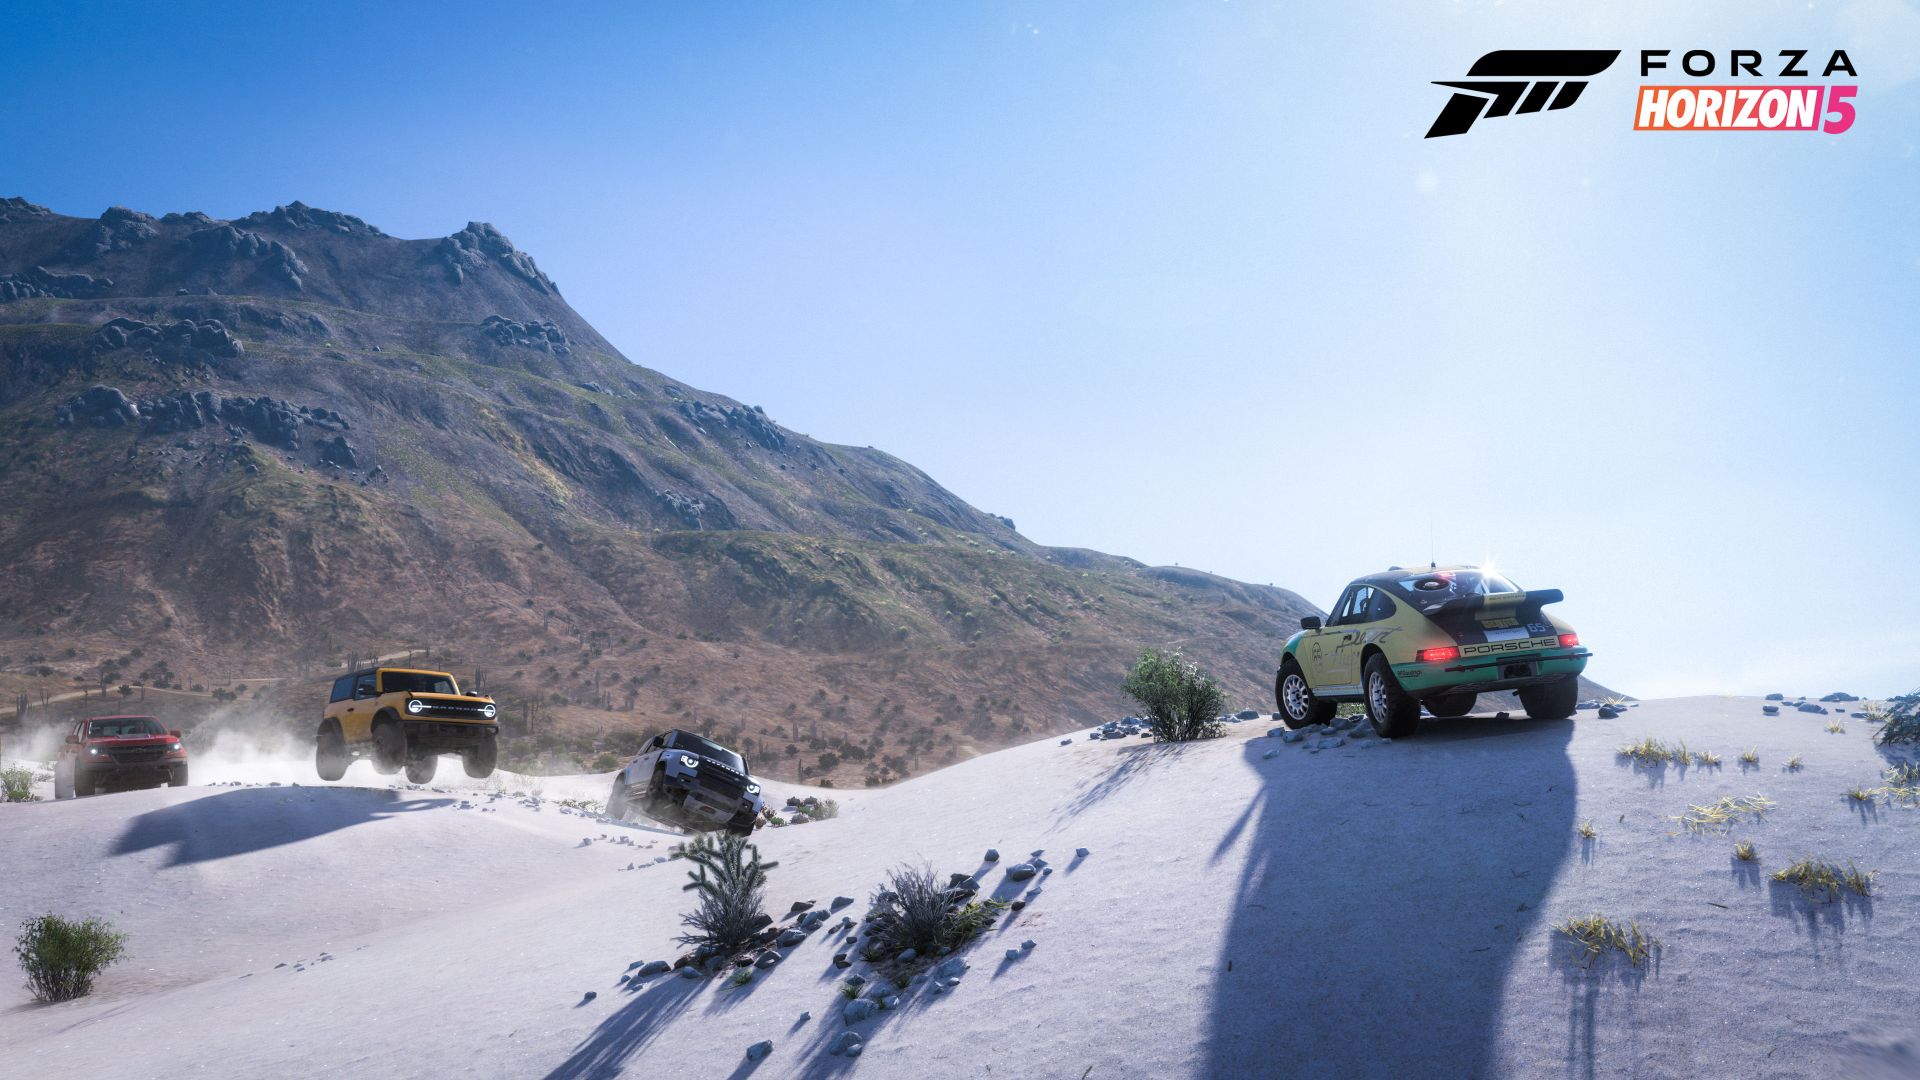 Форза Хорайзен 5, Forza Horizon 5, screenshot, 4K (horizontal)